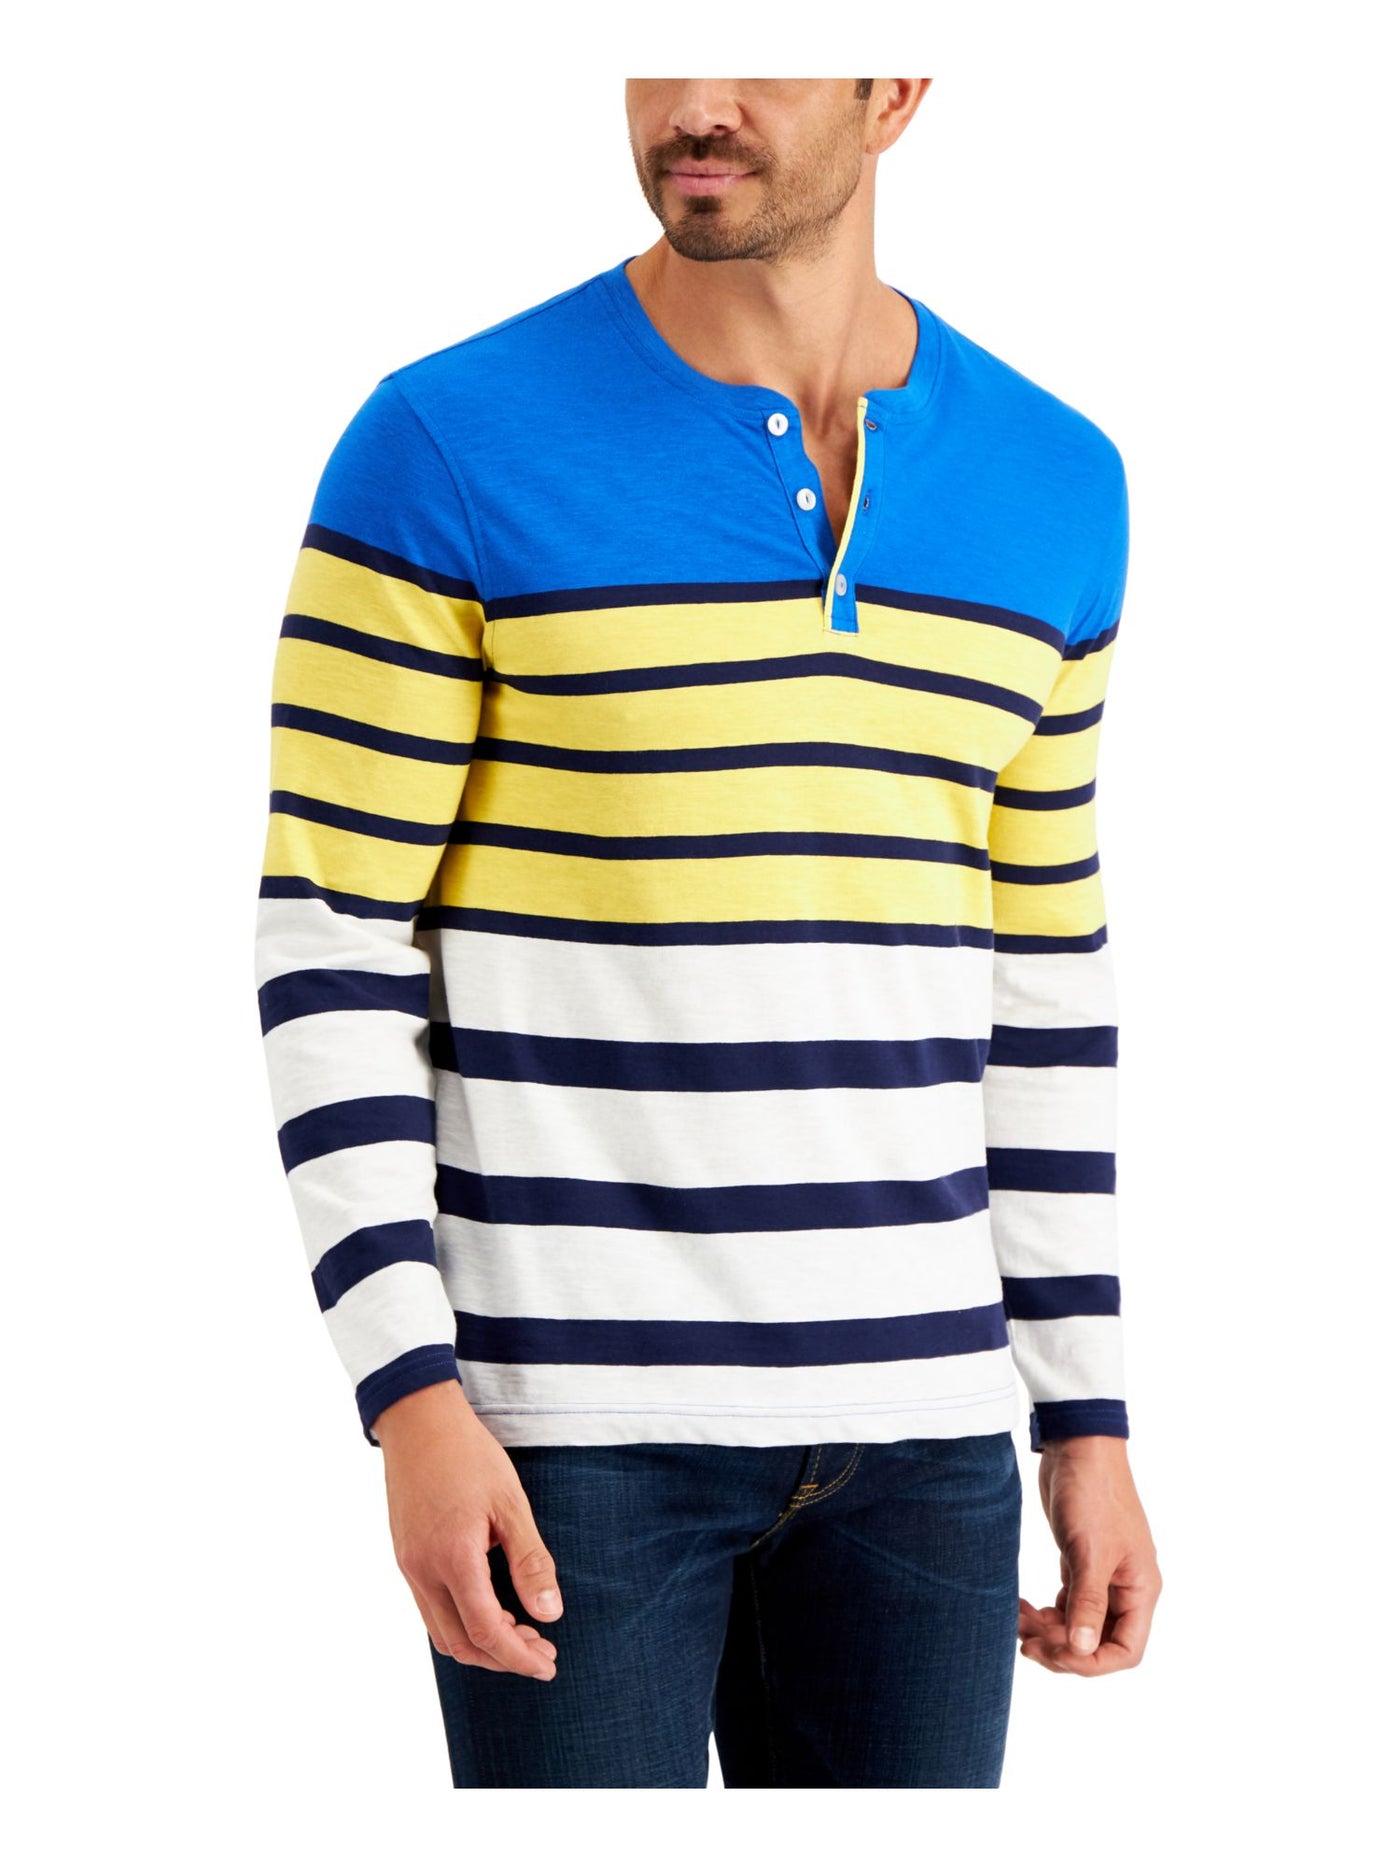 CLUBROOM Mens Blue Striped Classic Fit Henley Shirt L